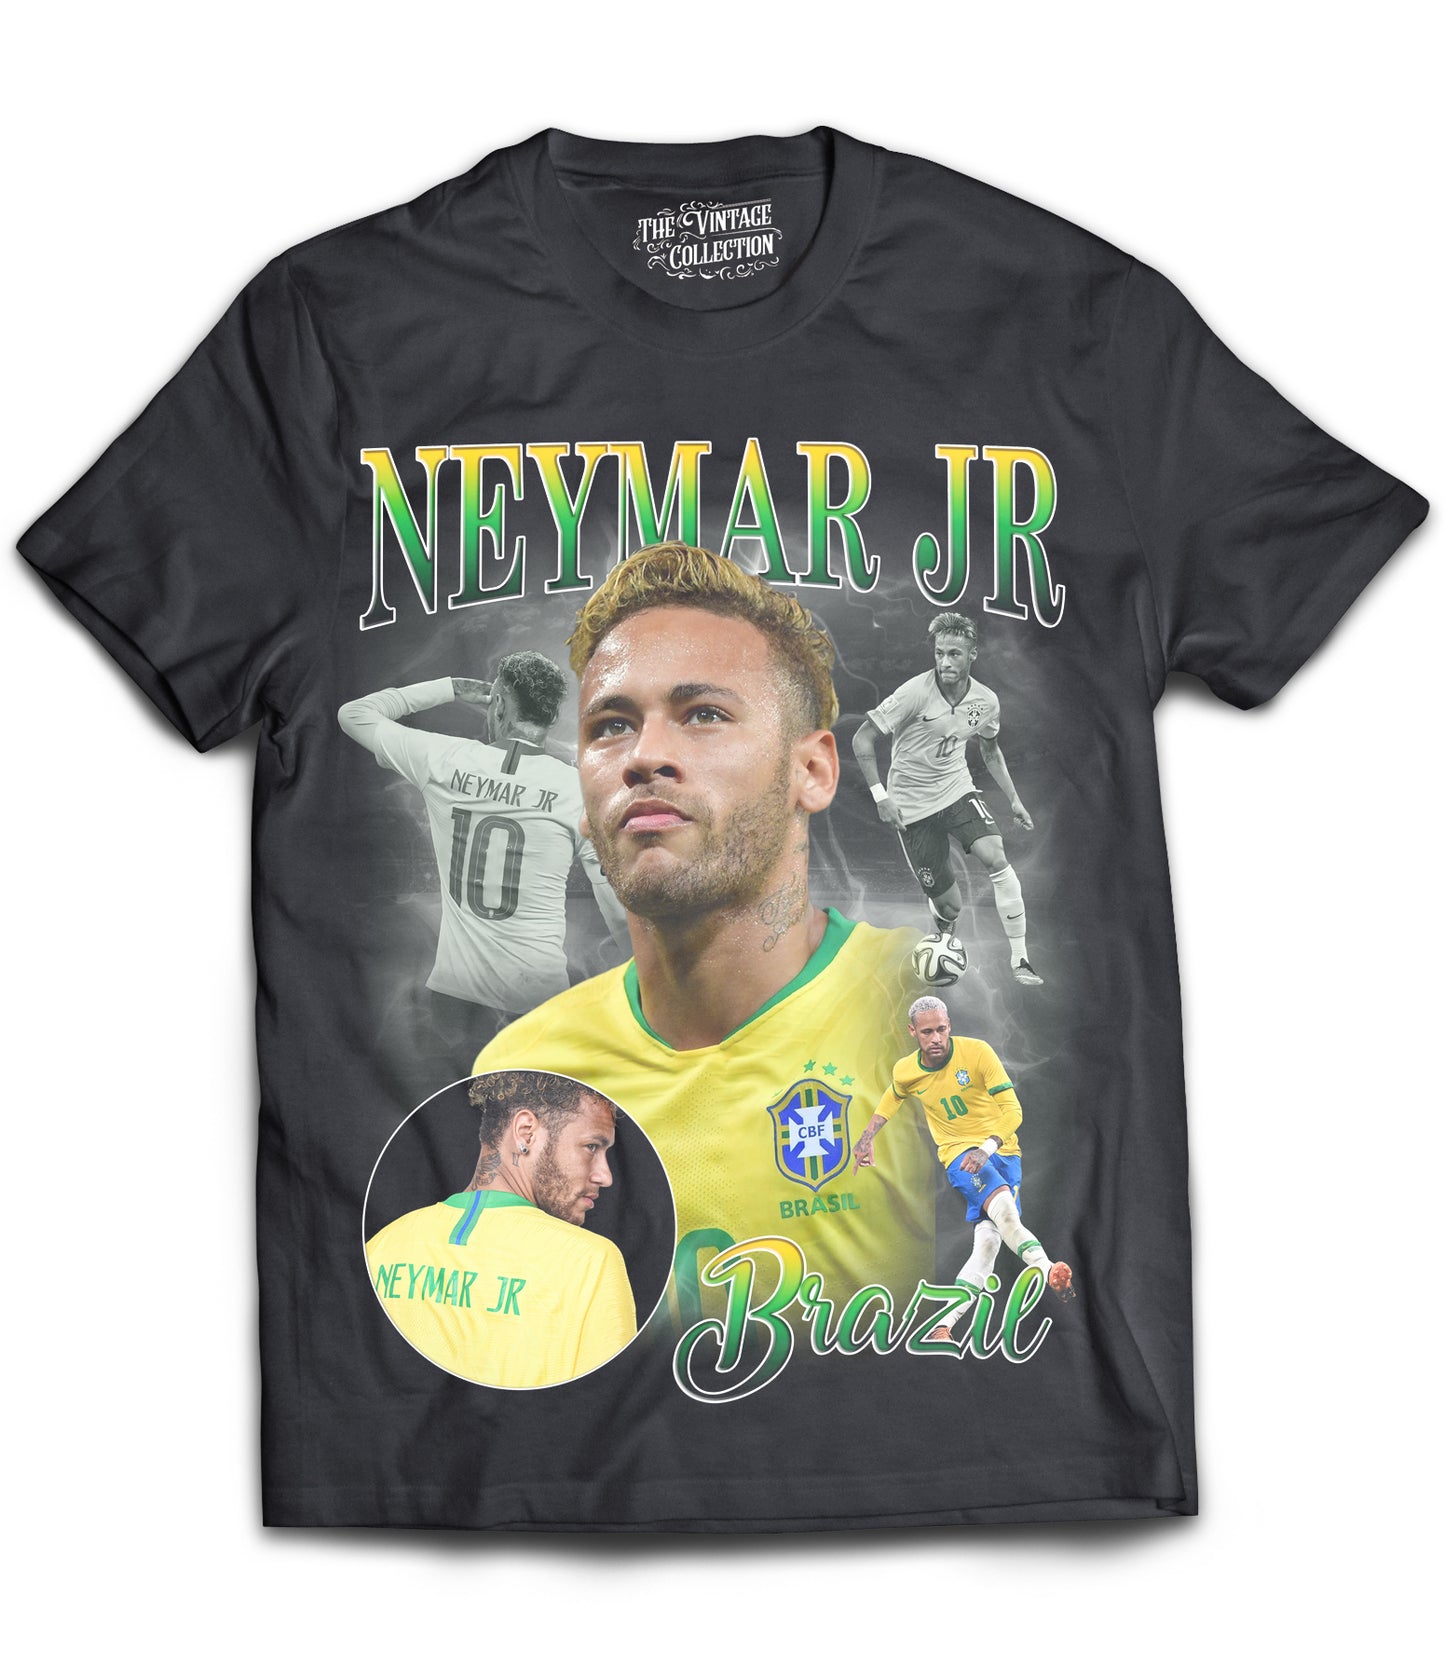 Neymar Jr. Tribute Shirt (Black)